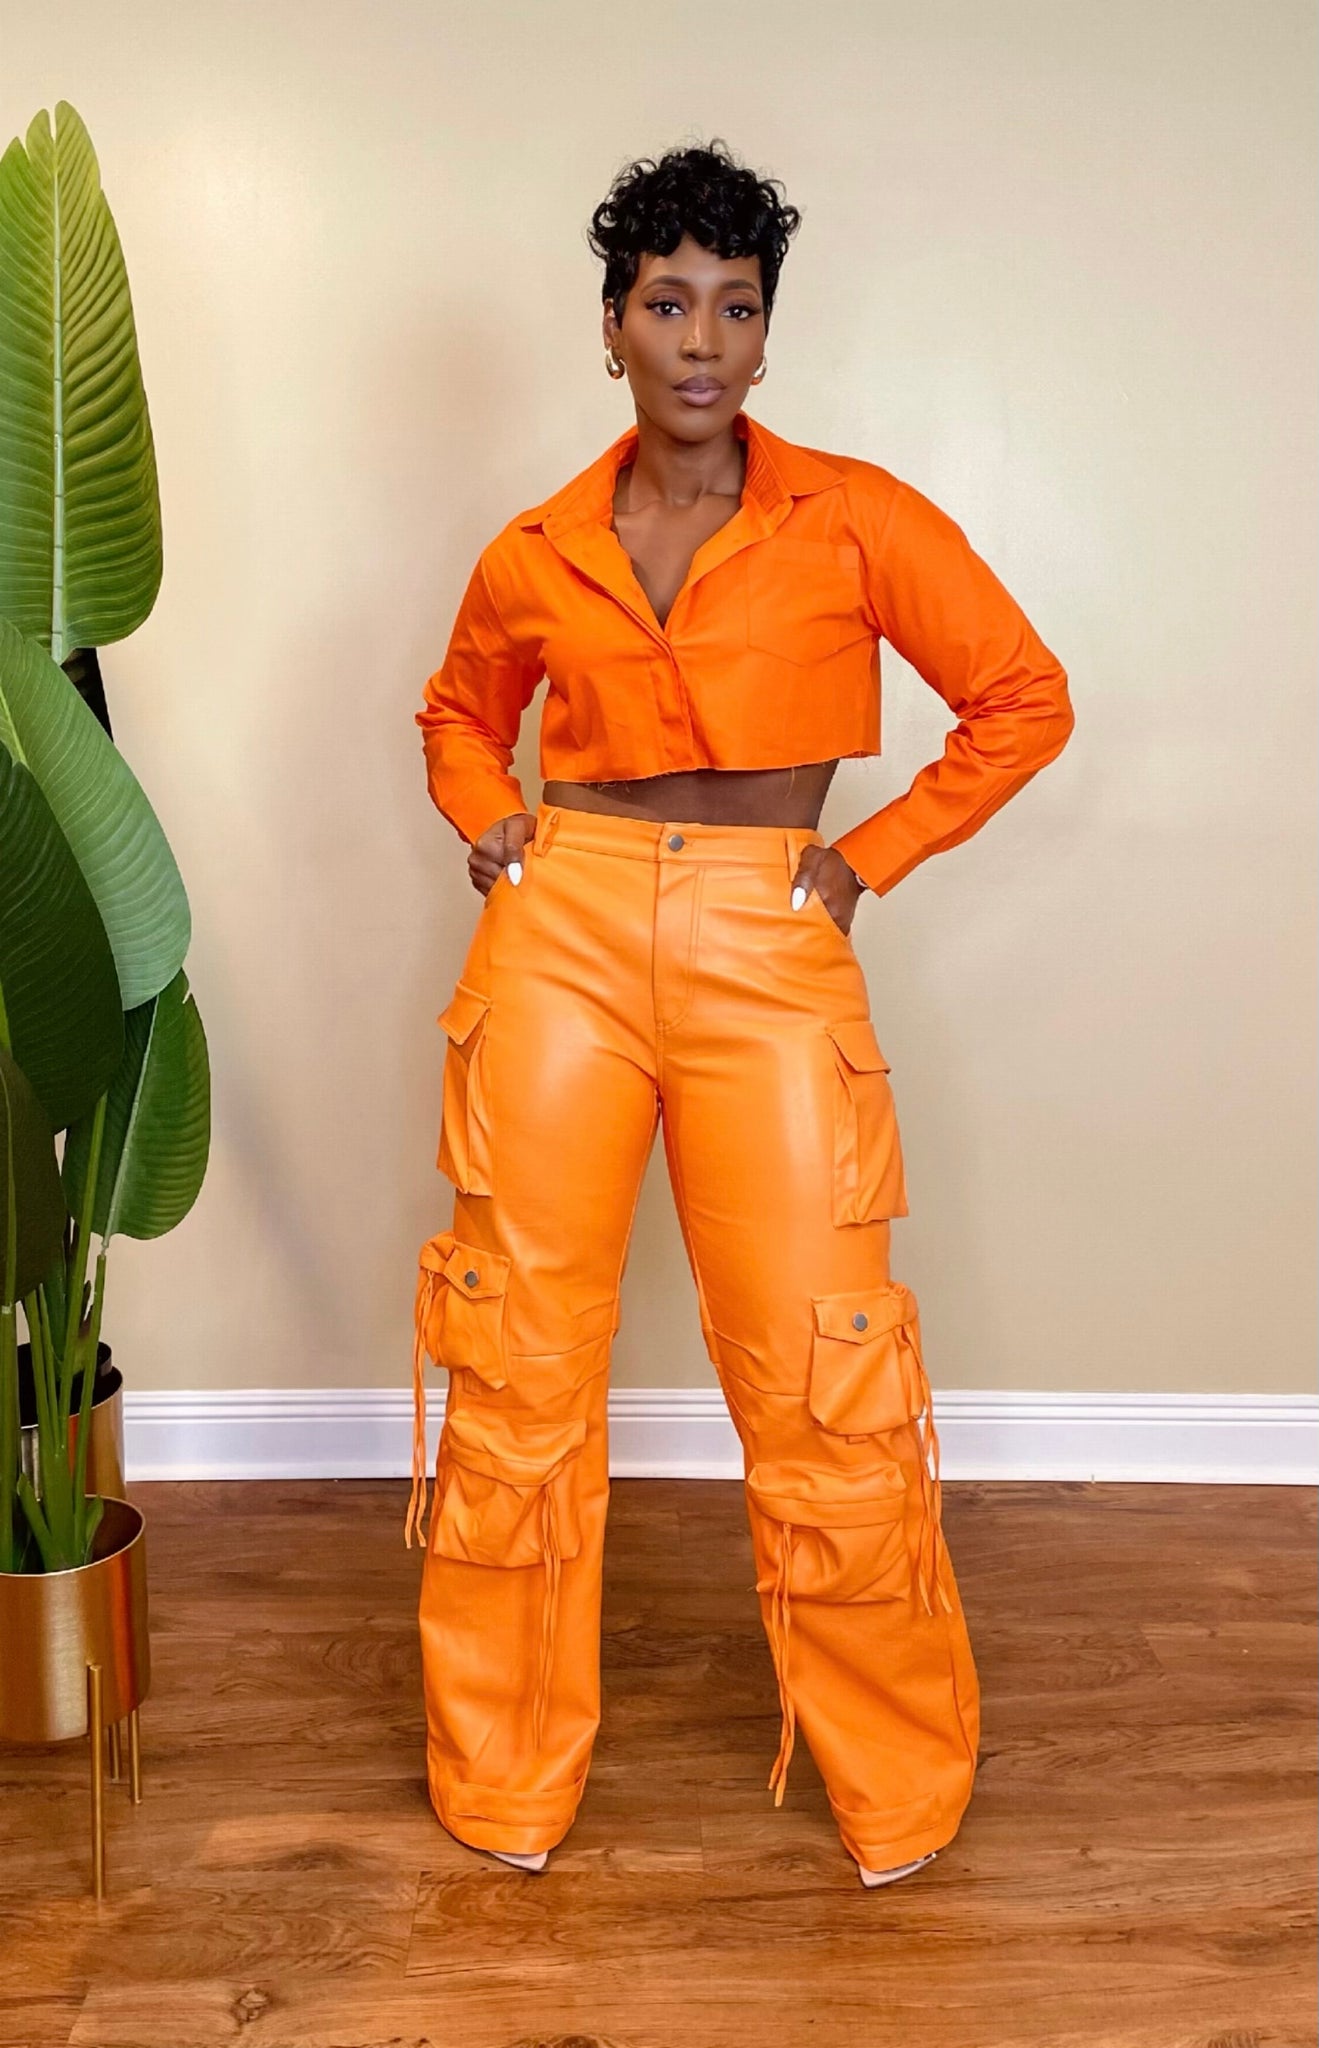 Orange High Waisted Vegan Leather Pants